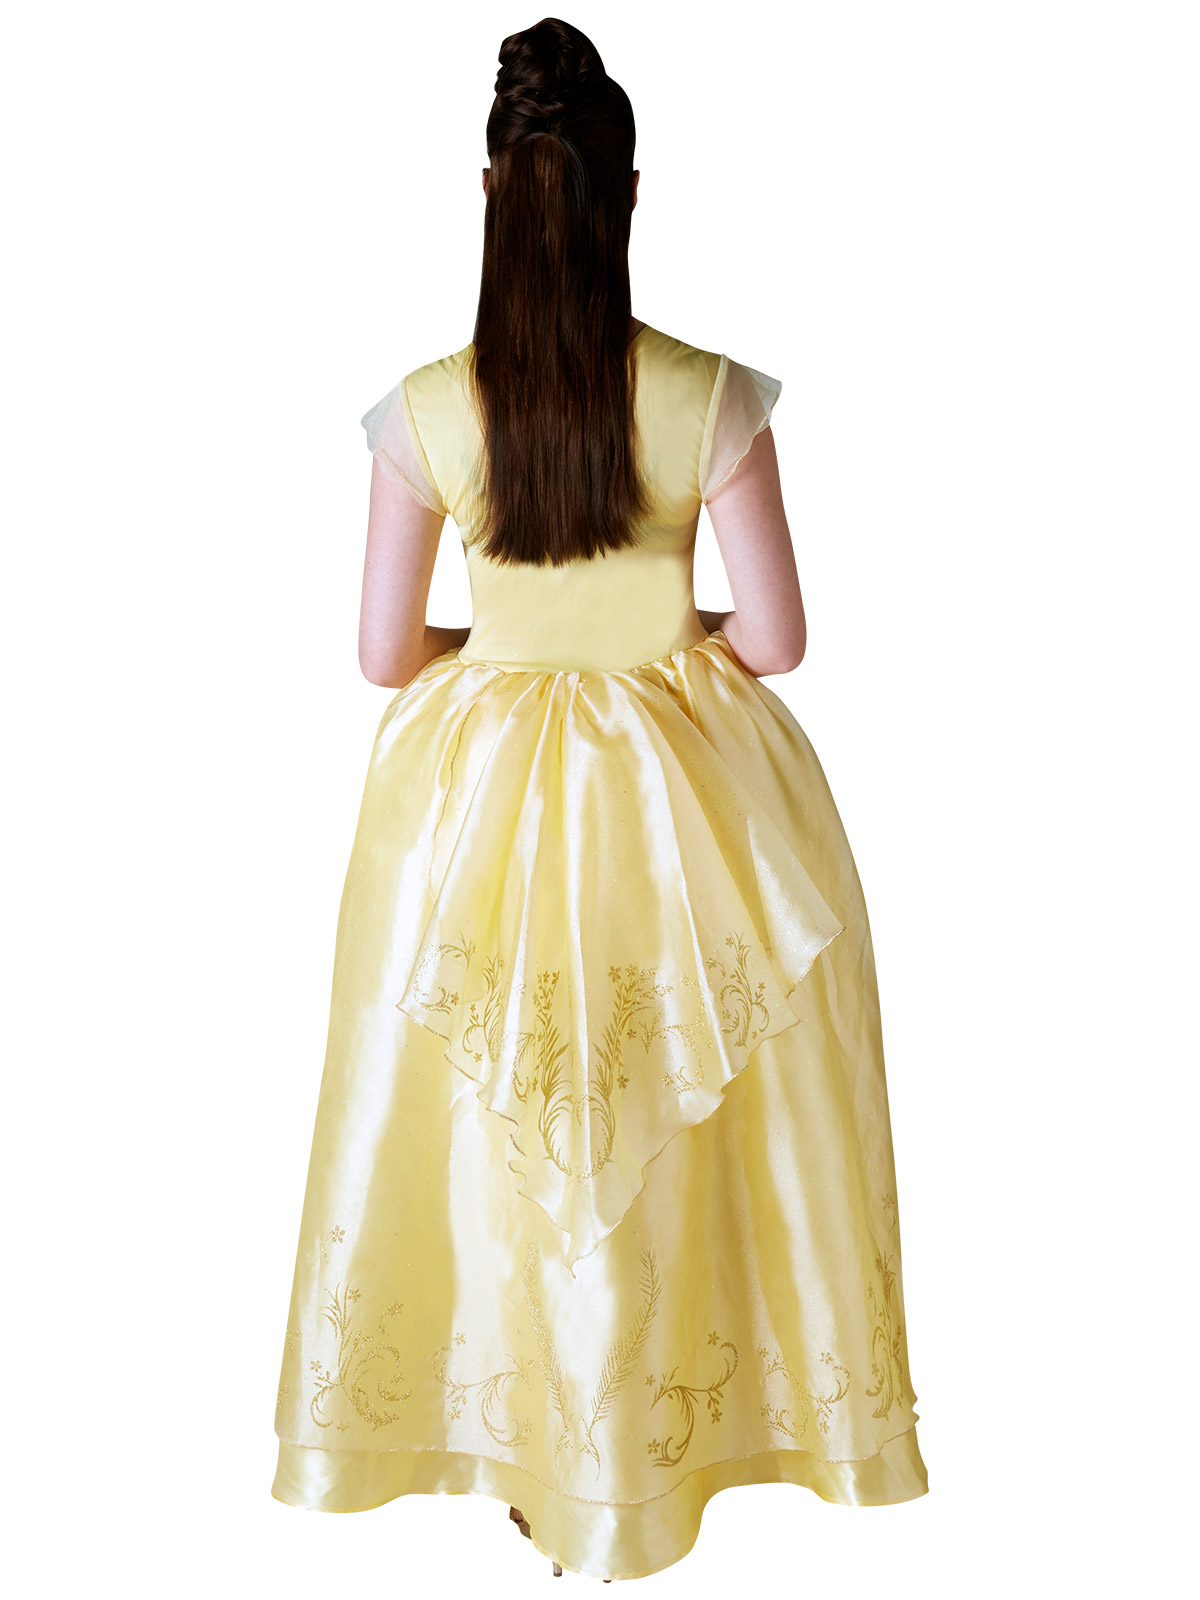 Adult Belle Costume - Disney Princess